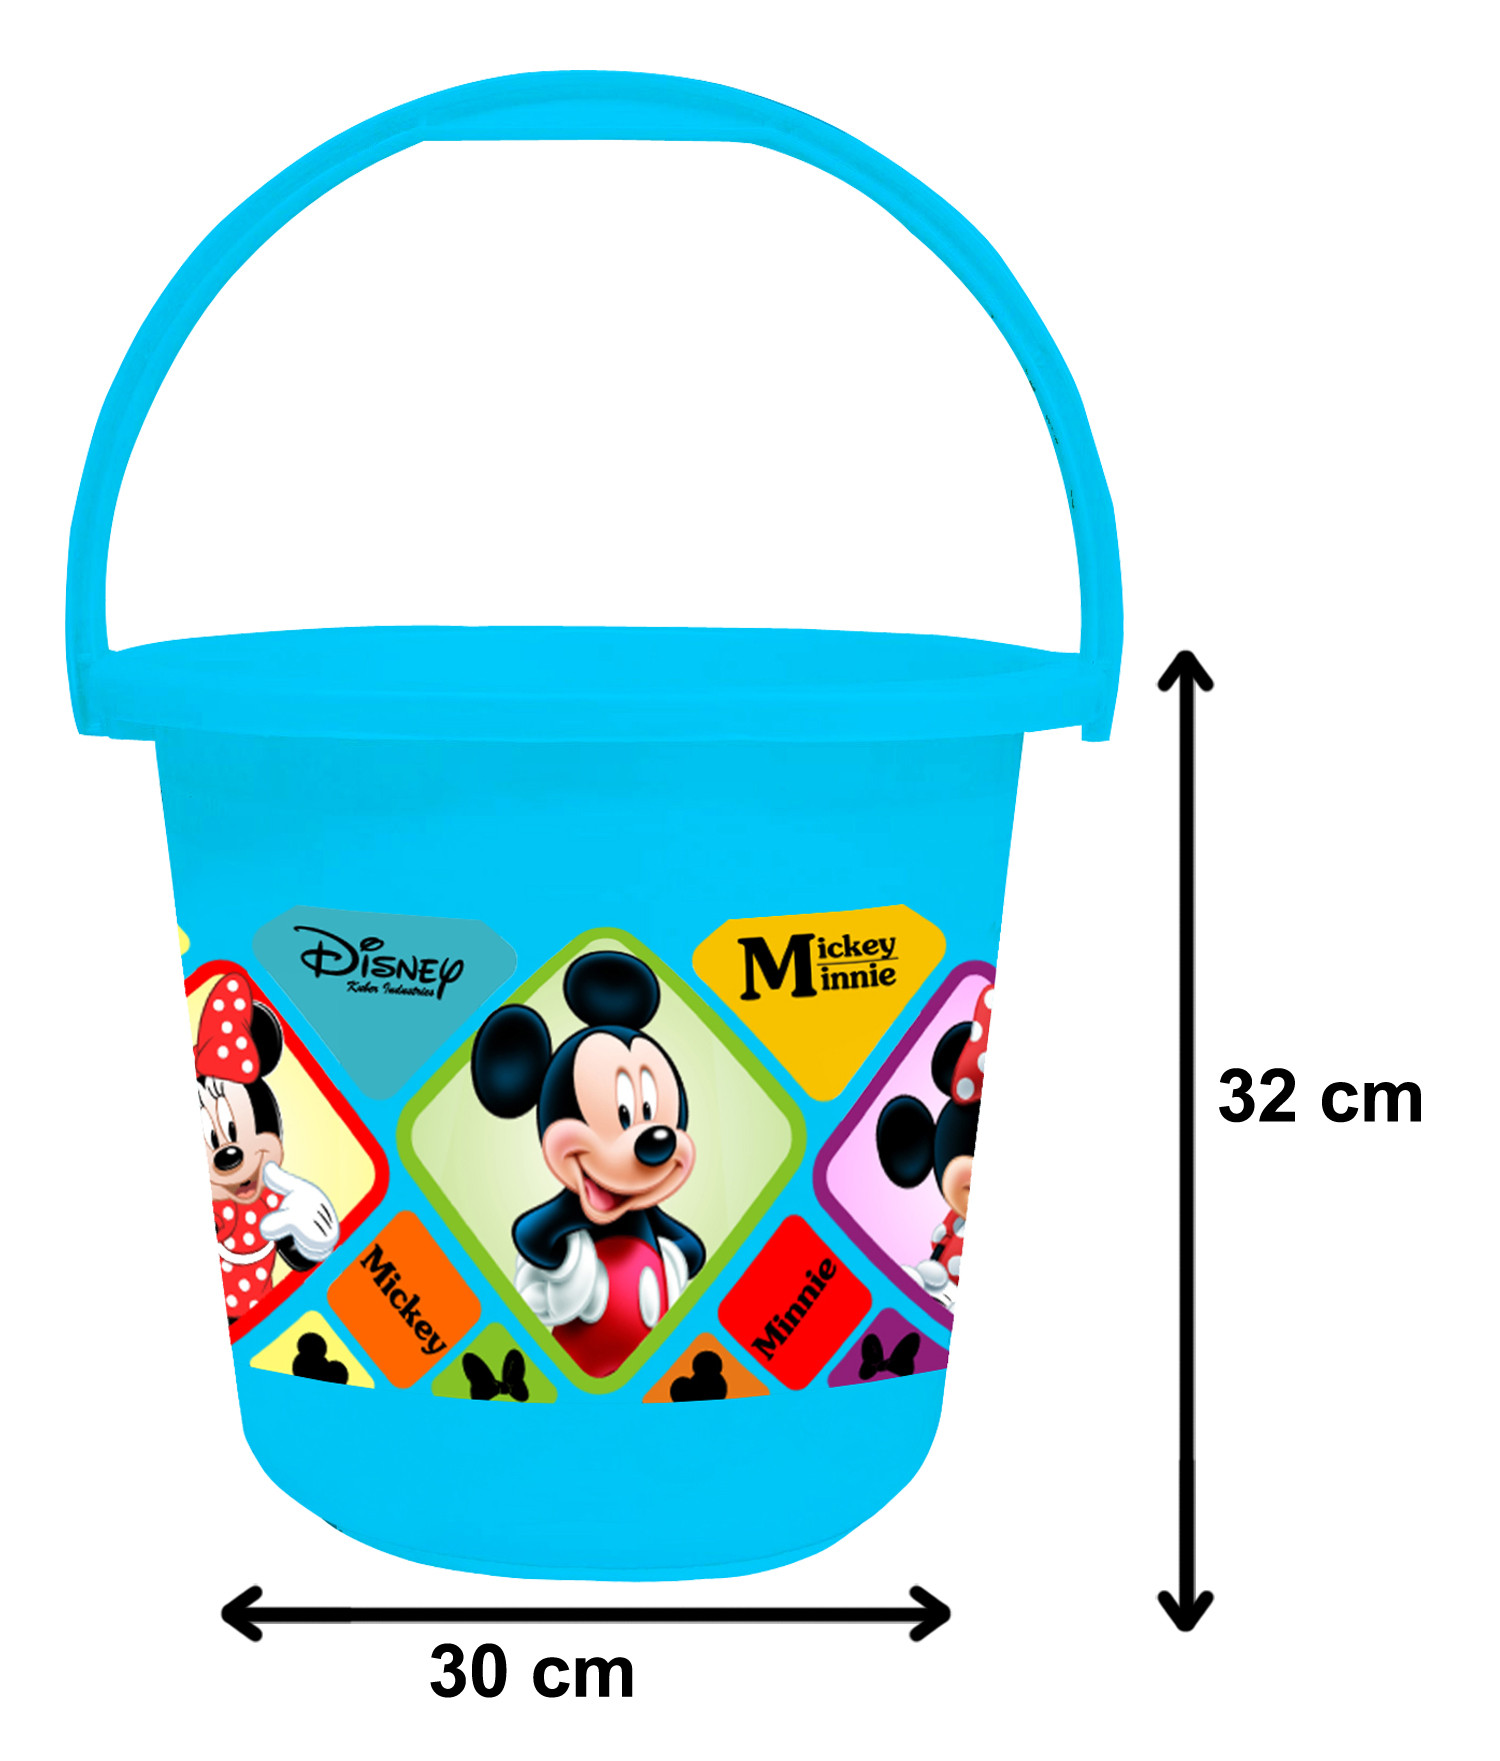 Kuber Industries Disney Mickey Minnie Print Unbreakable Virgin Plastic Strong Bathroom Bucket ,16 LTR (Blue) -HS_35_KUBMART17829